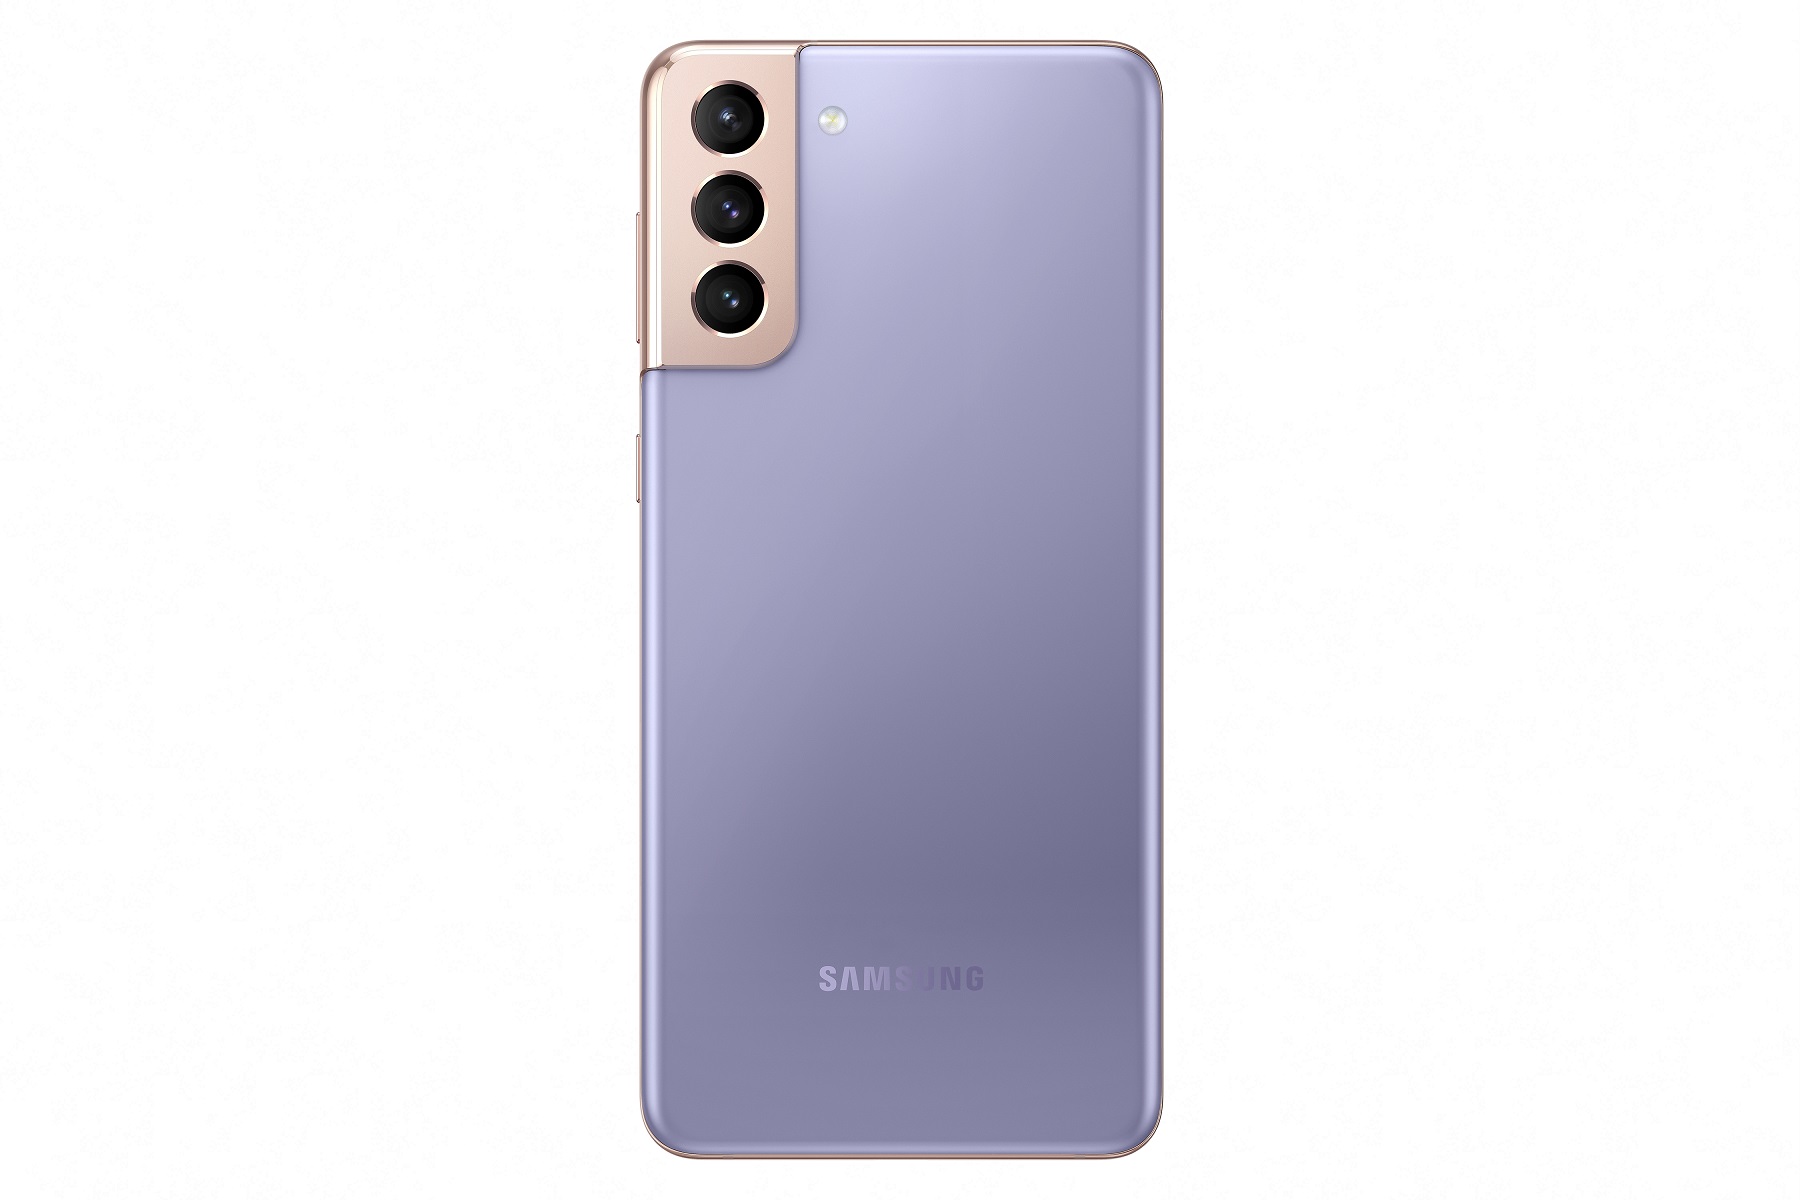 Samsung Galaxy S21+ violet 256GB